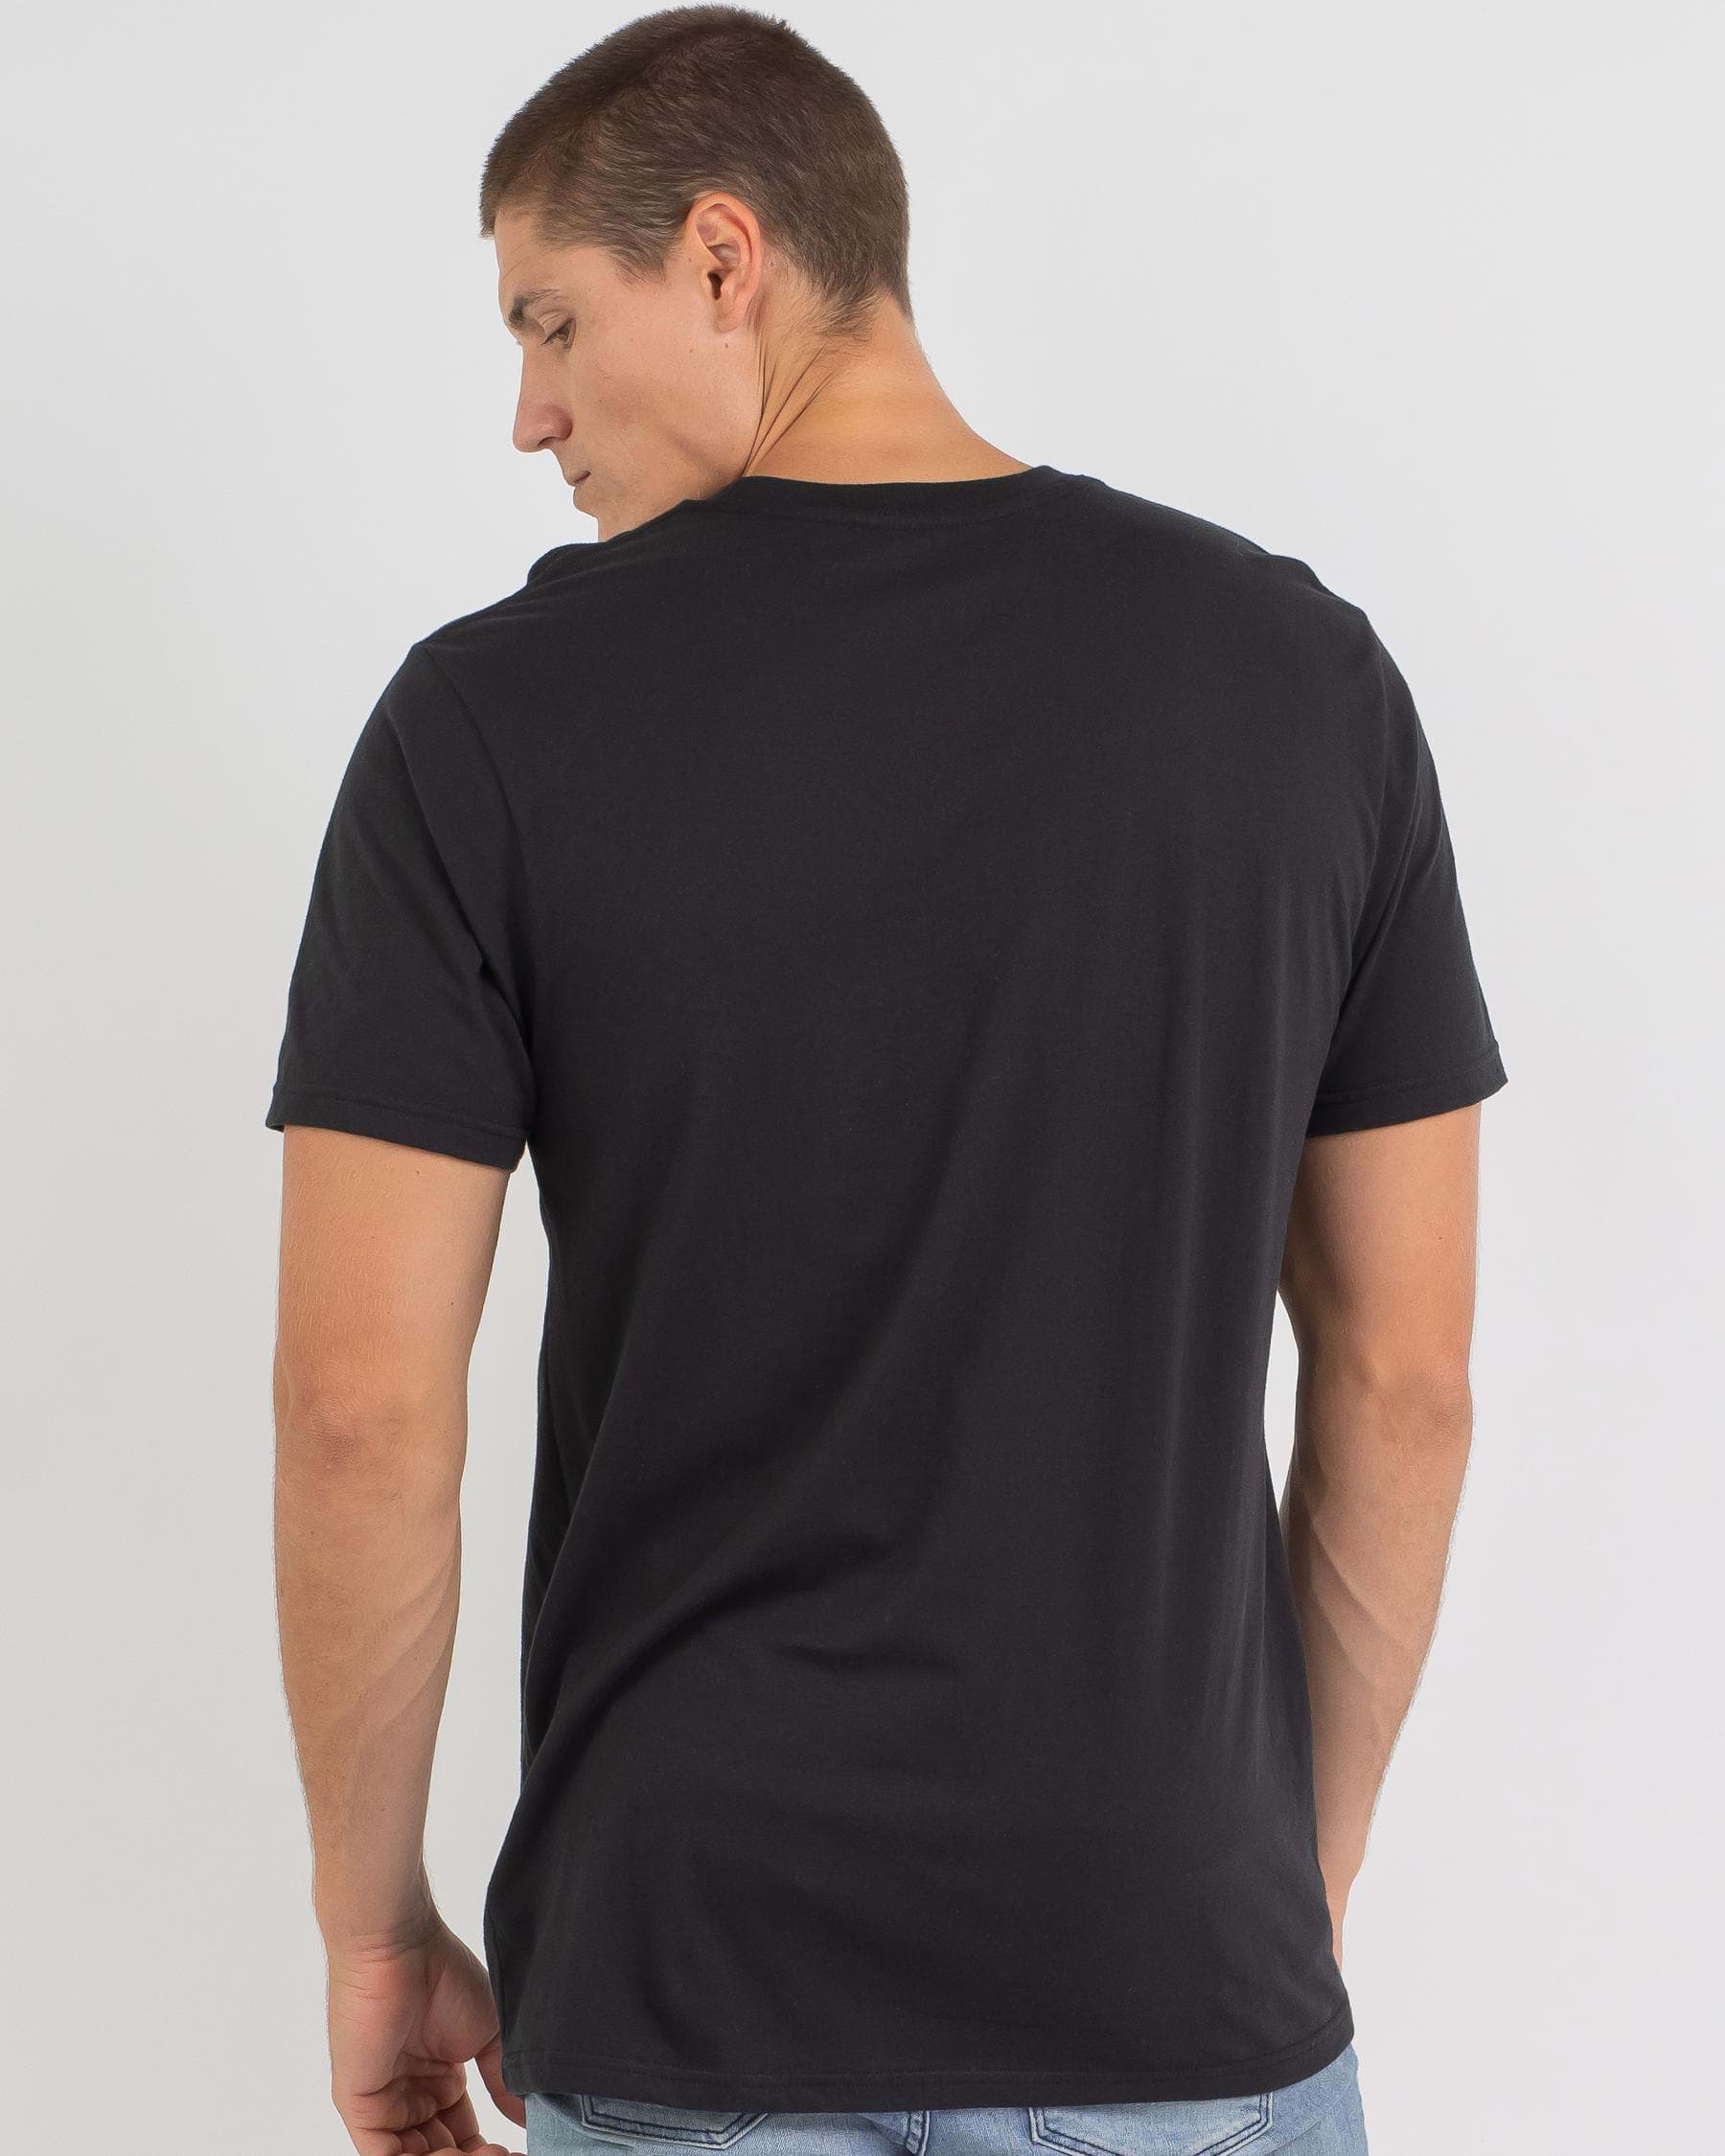 Fox Pinnacle T-Shirt In Black/black - Fast Shipping & Easy Returns ...